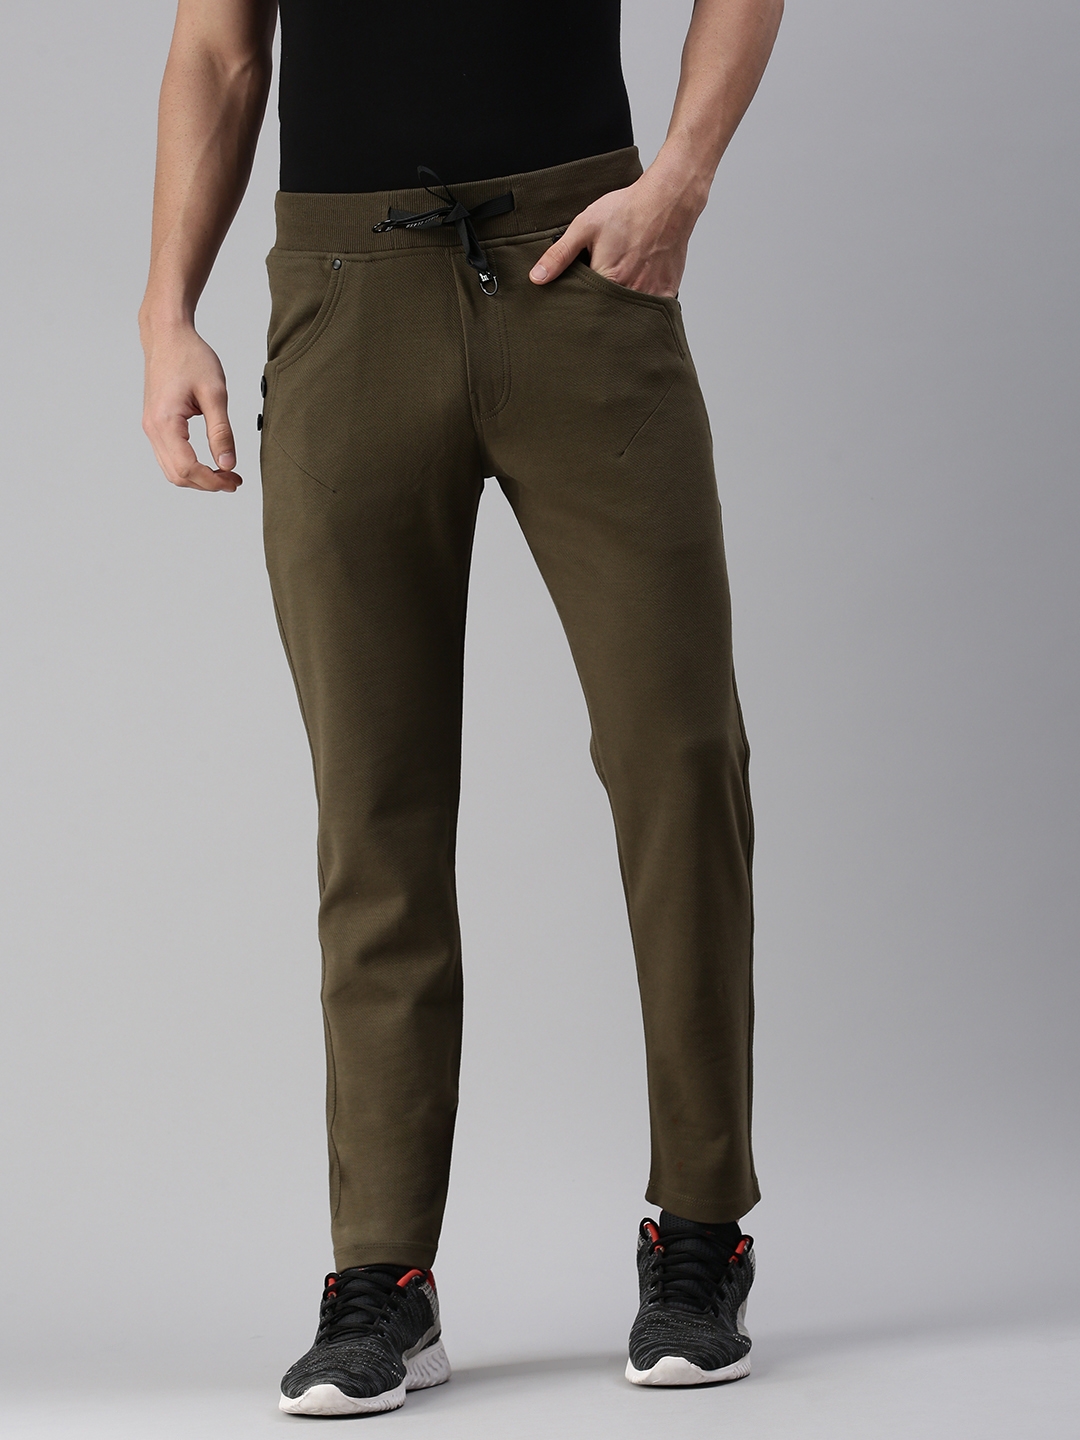 Showoff | SHOWOFF Men's Solid Cotton Olive Straight Fit Track Pants